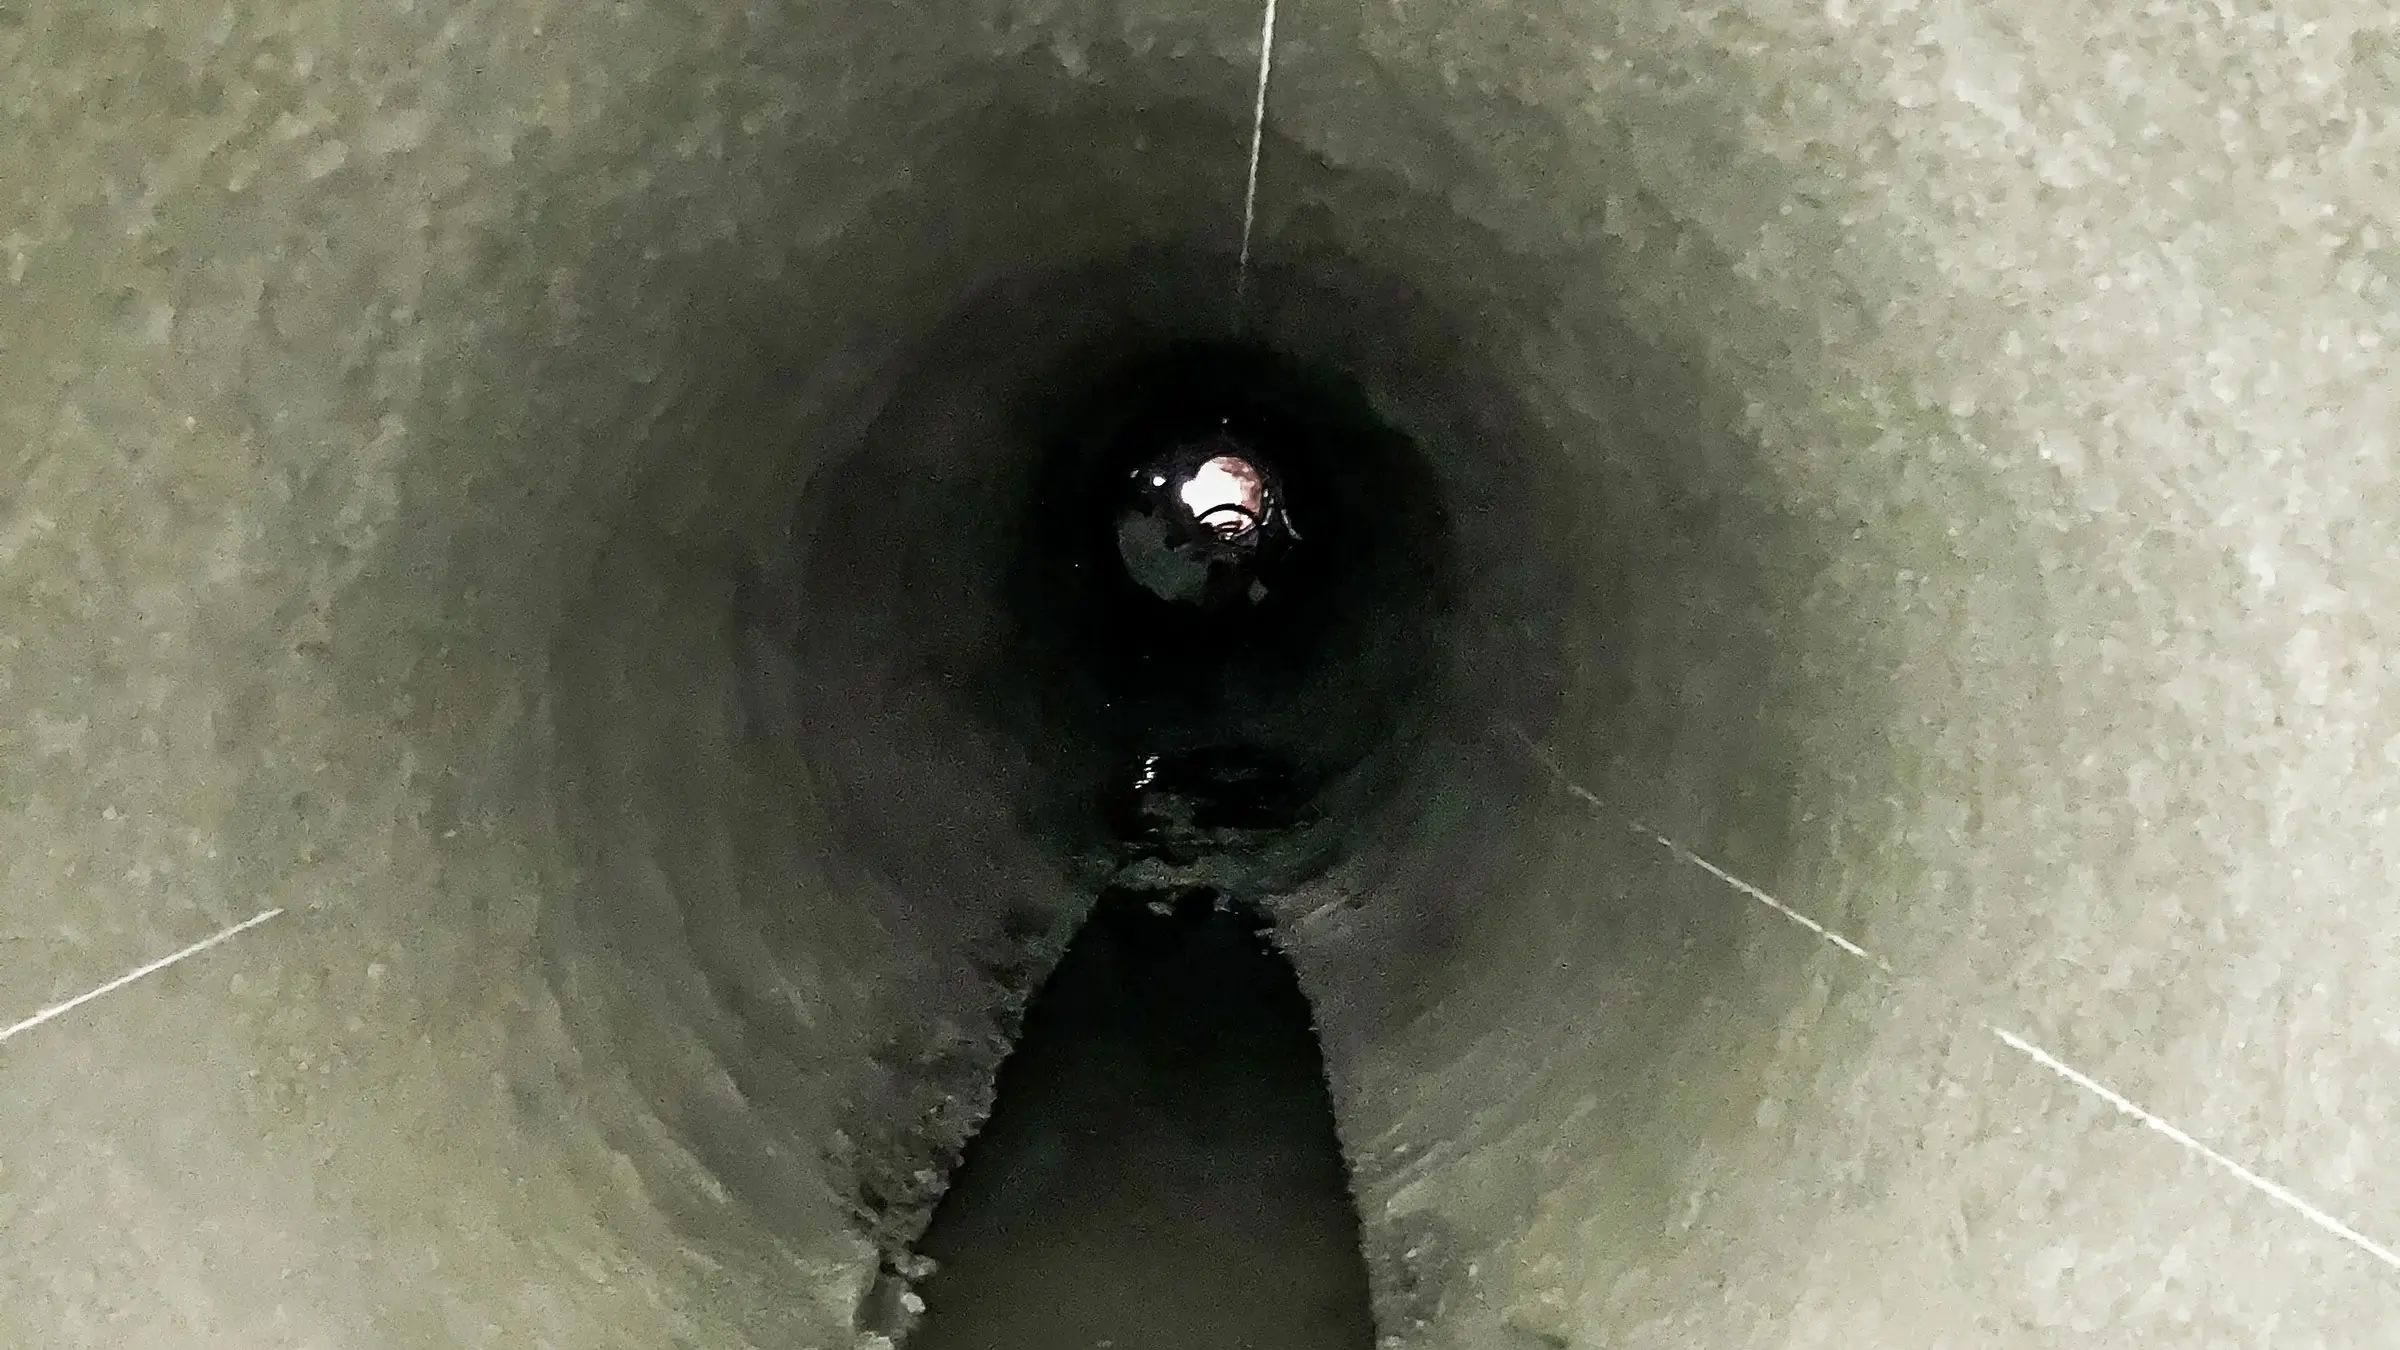 Lining is sprayed in tunnel in Breckenridge Colorado